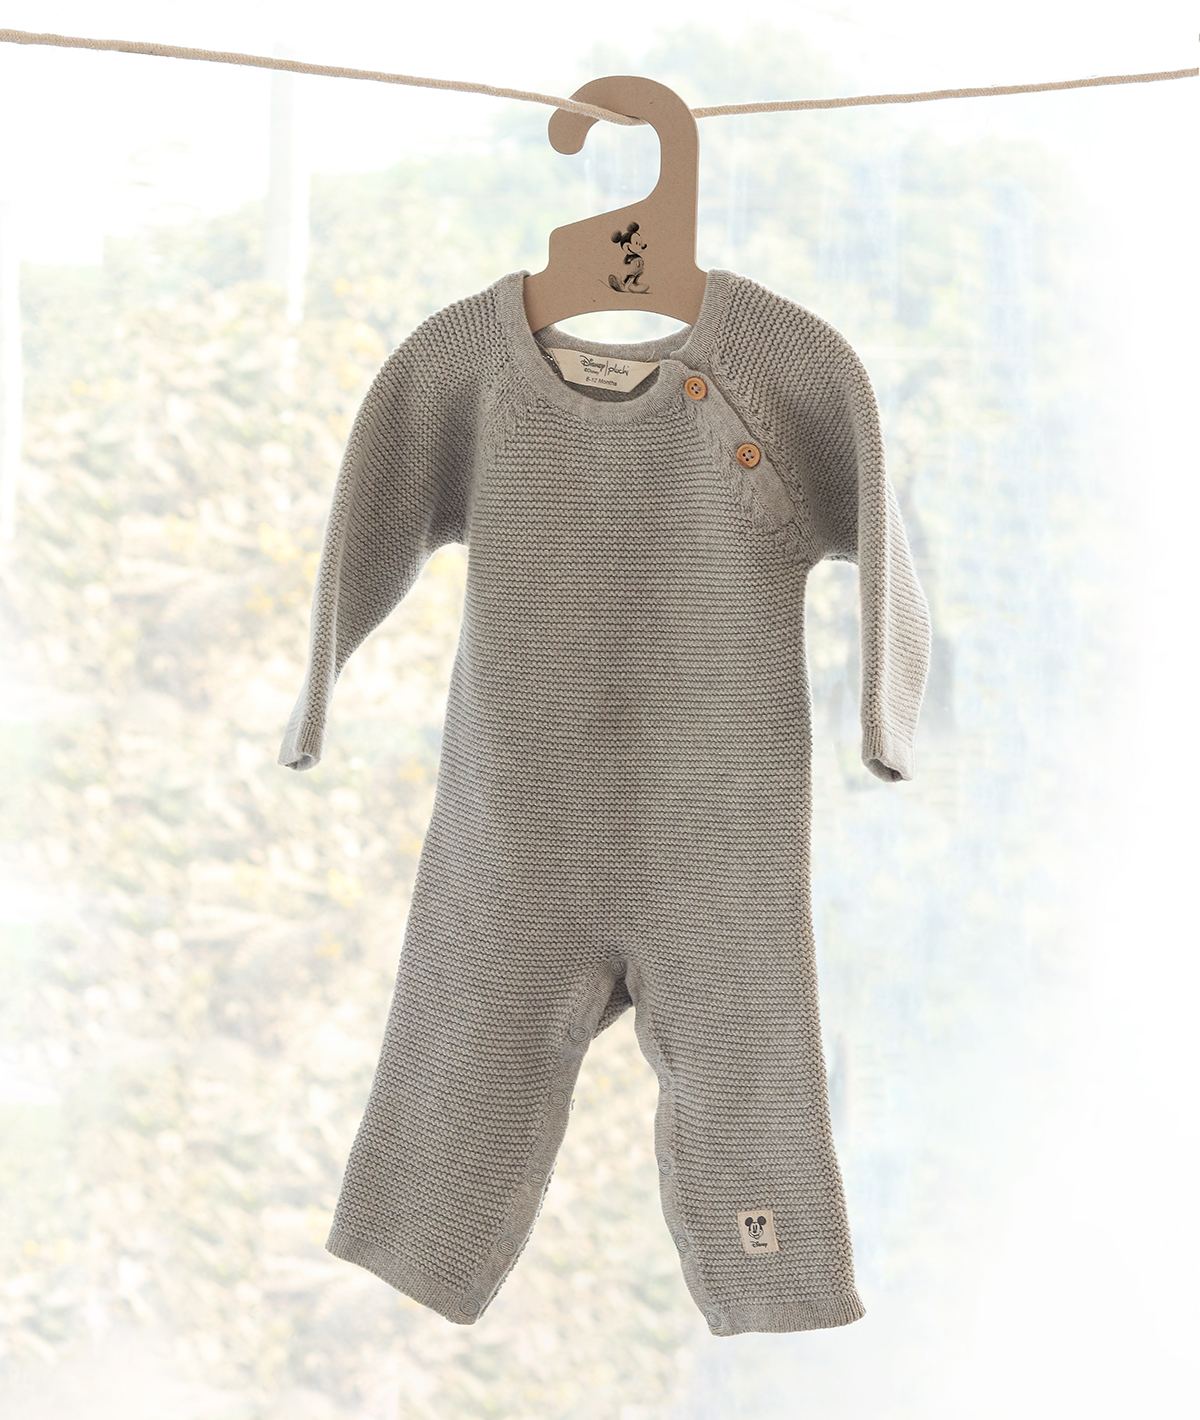 Disney baby garments